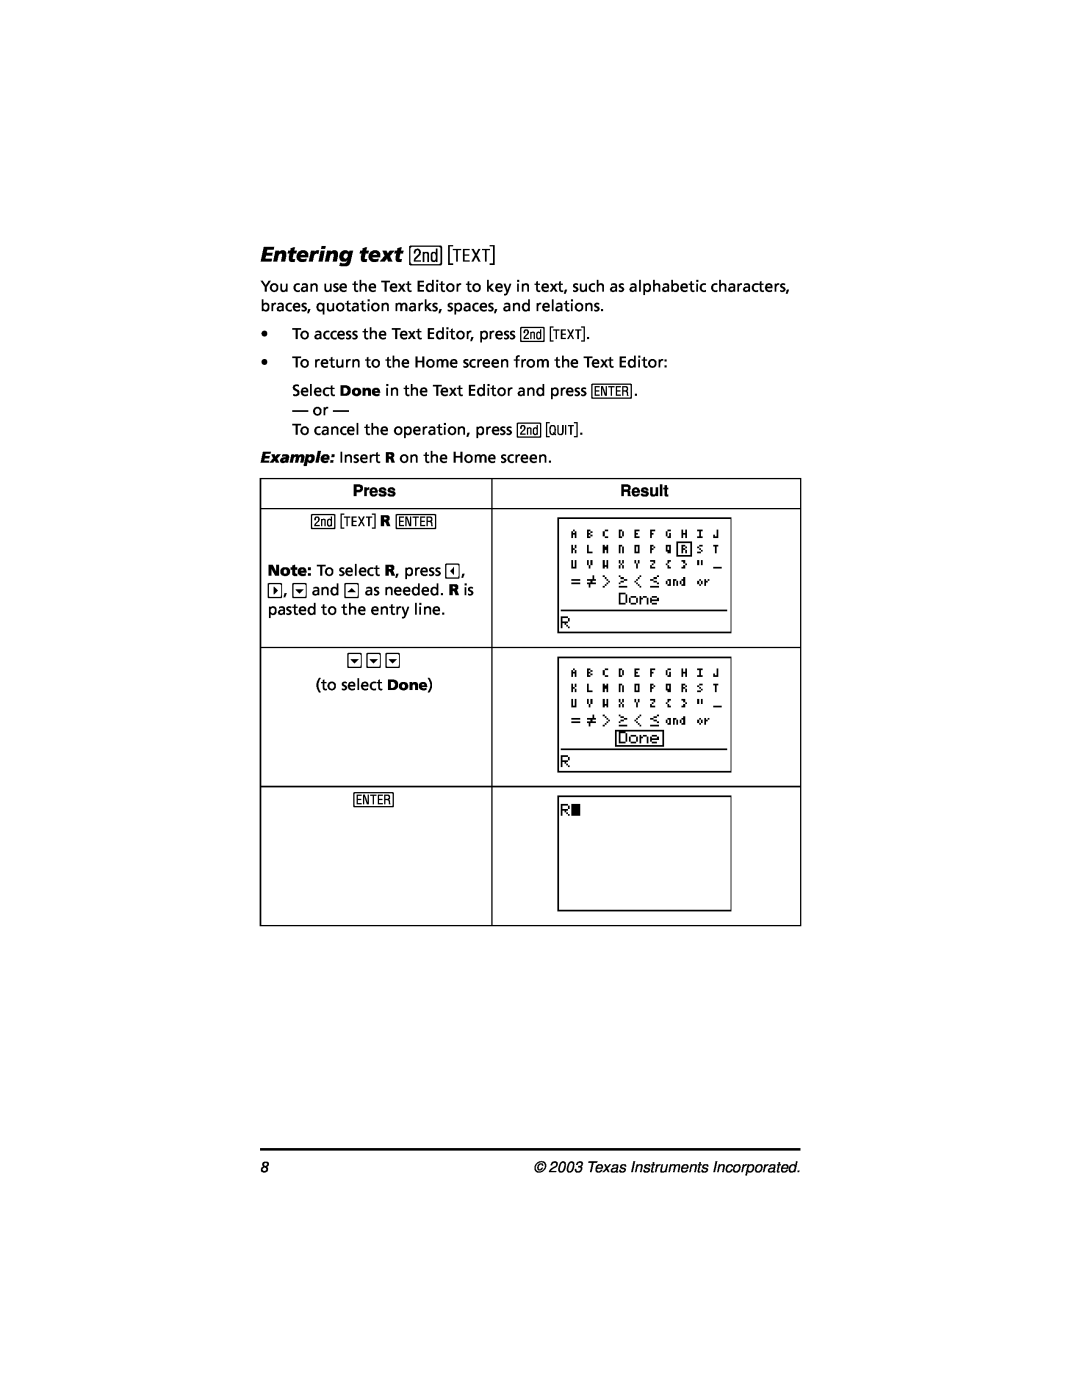 Texas Instruments TI-73, CBL 2 manual Entering text -t, Press, Result 